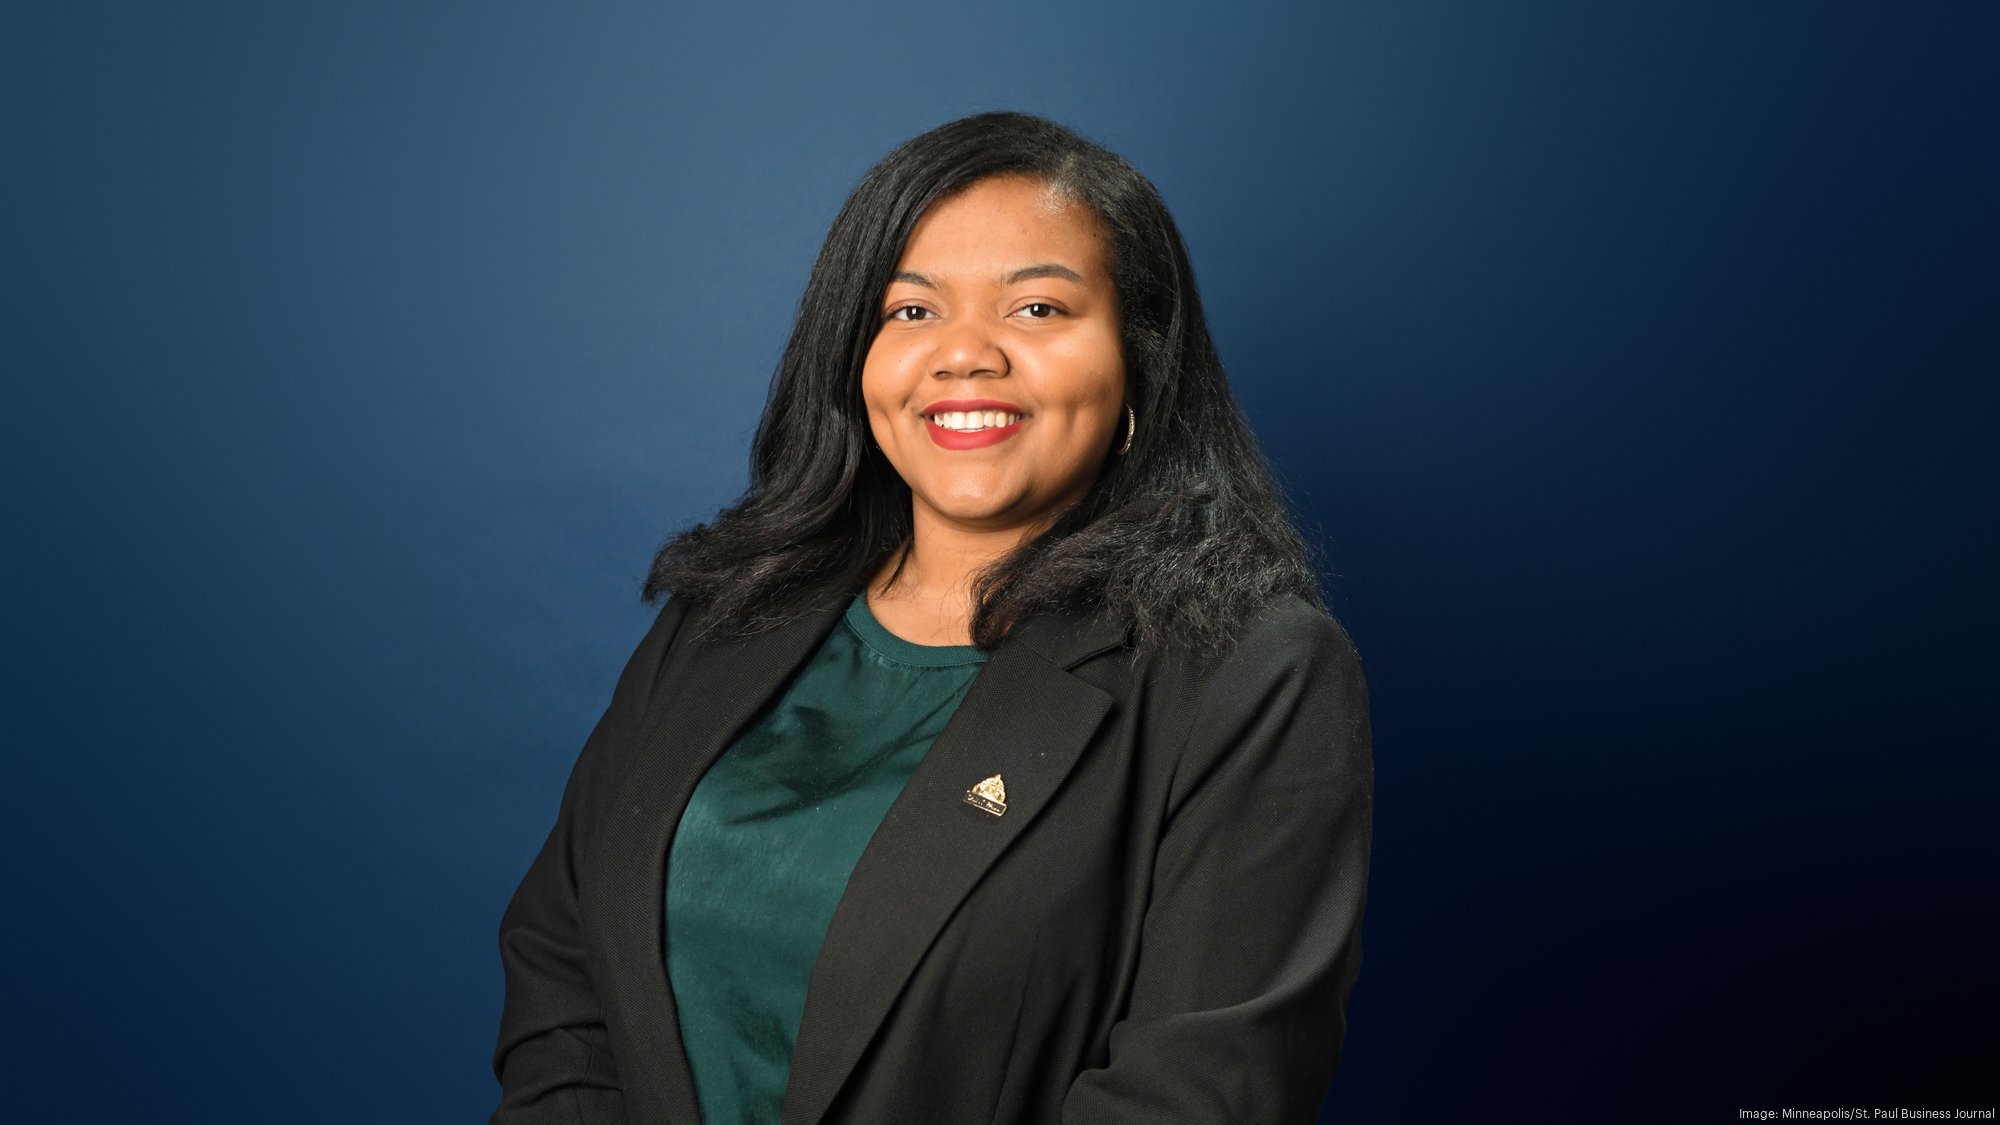 Councilwoman Cheniqua Johnson portrait in front of a blue background.